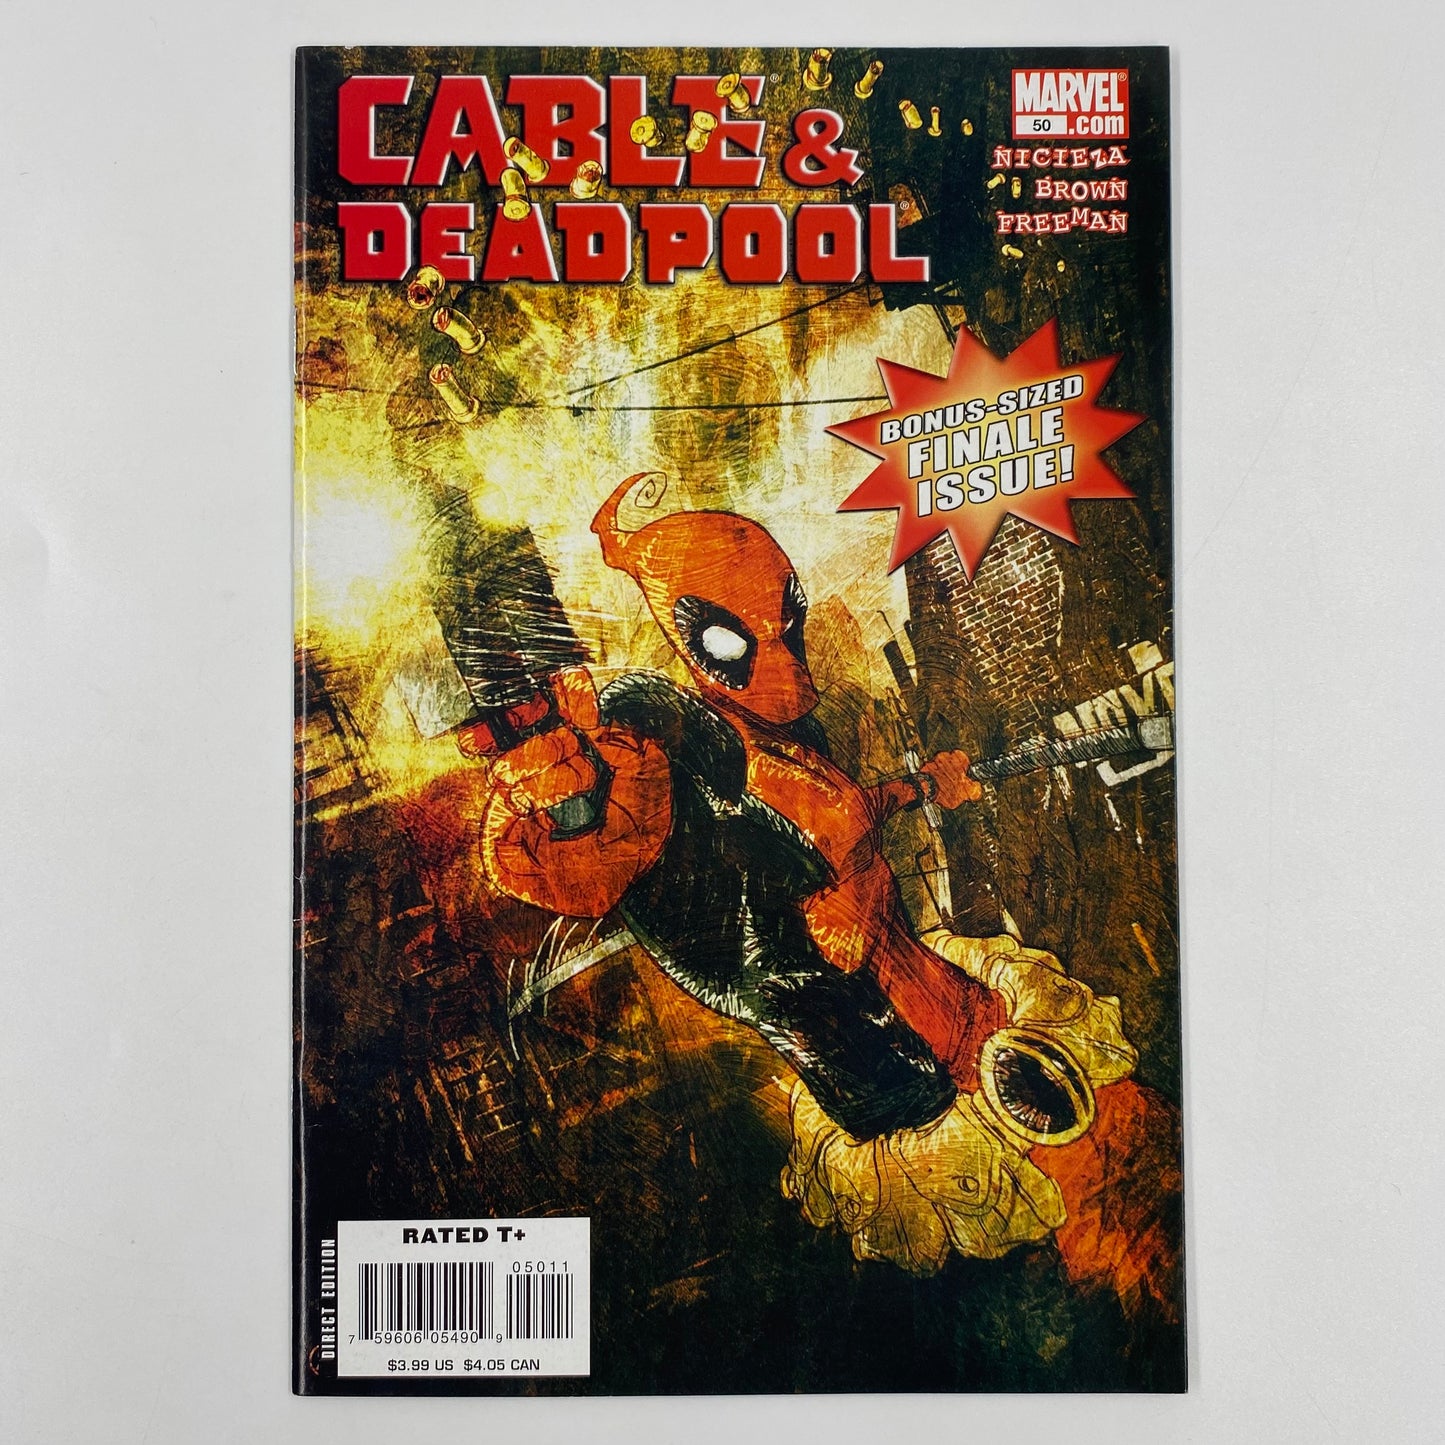 Cable & Deadpool #1-50 (2004-2007) Marvel